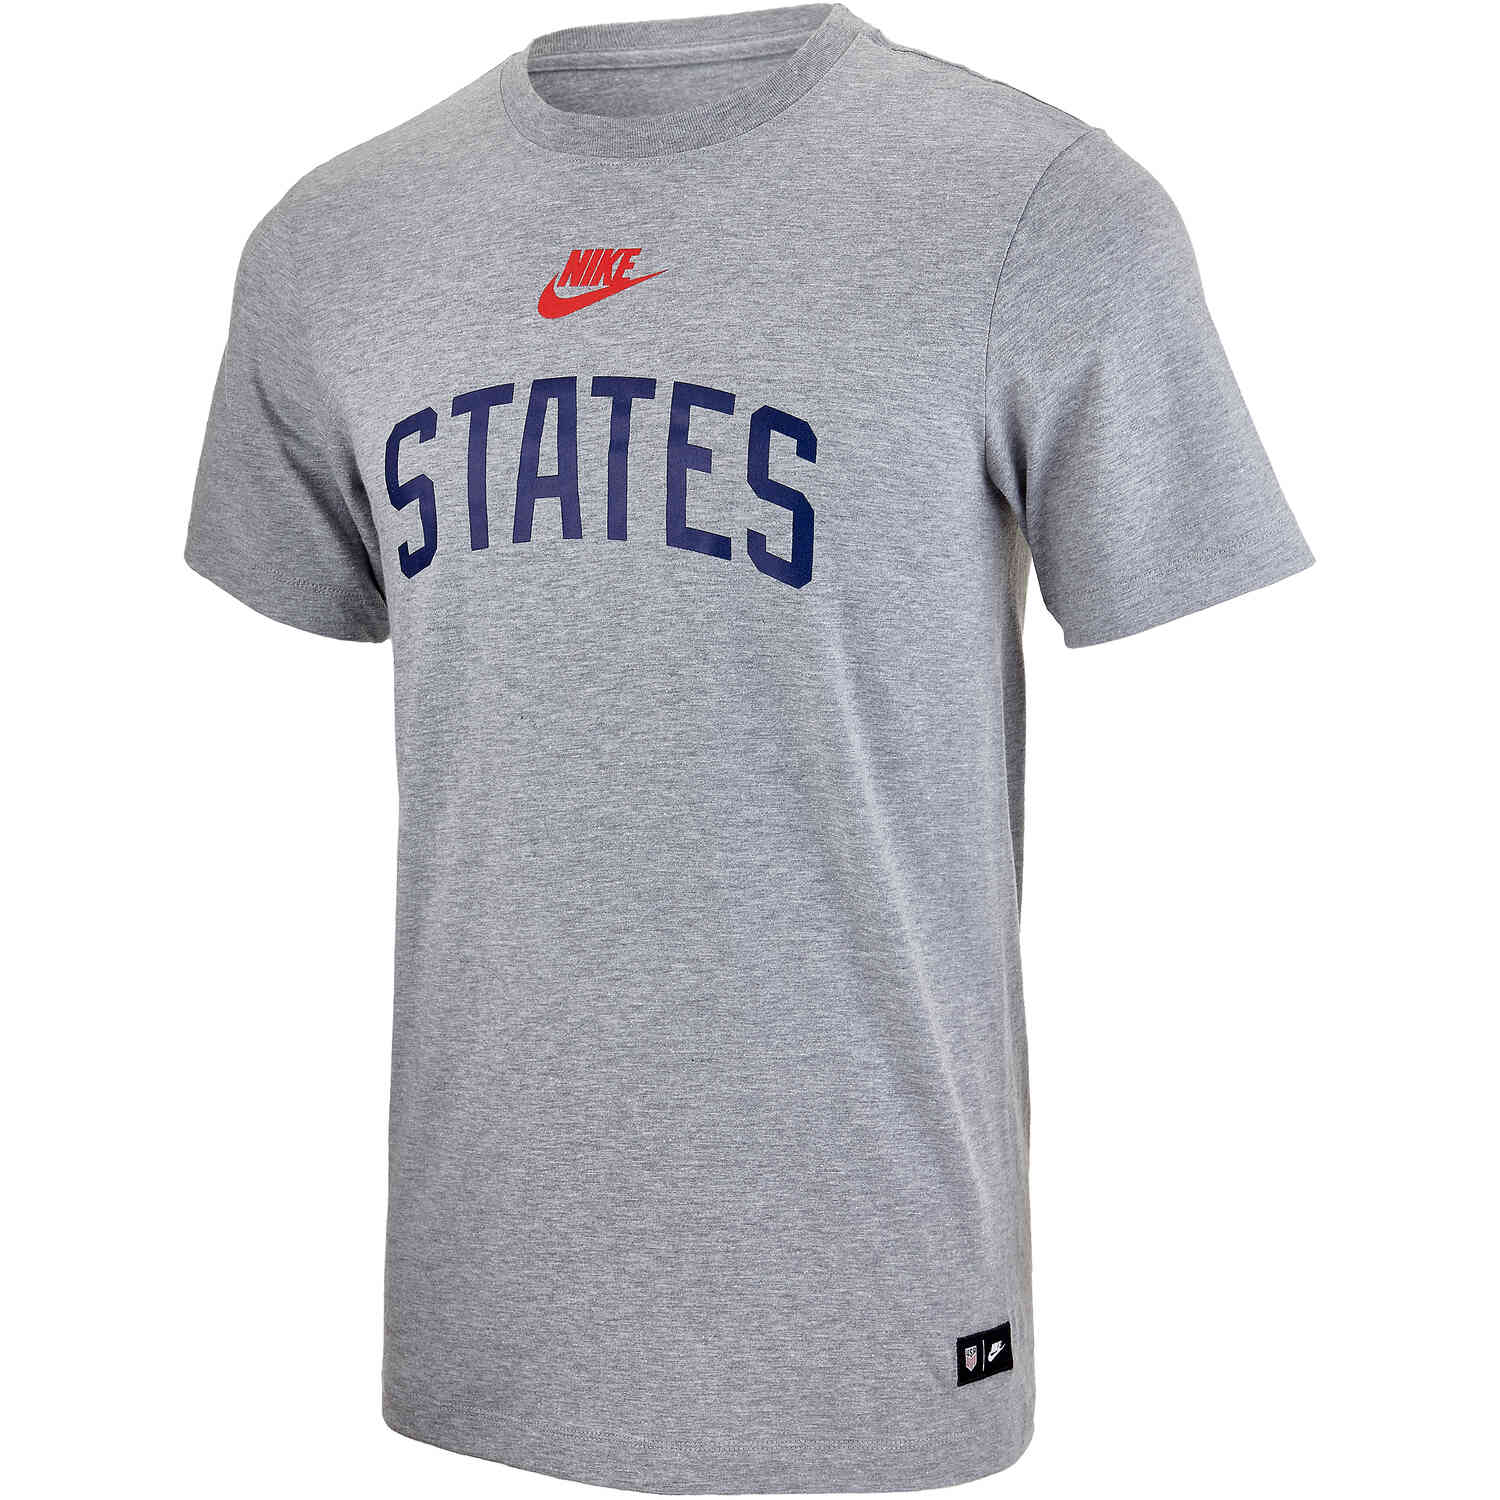 Nike USMNT States Tee - Dark Grey Heather - SoccerPro